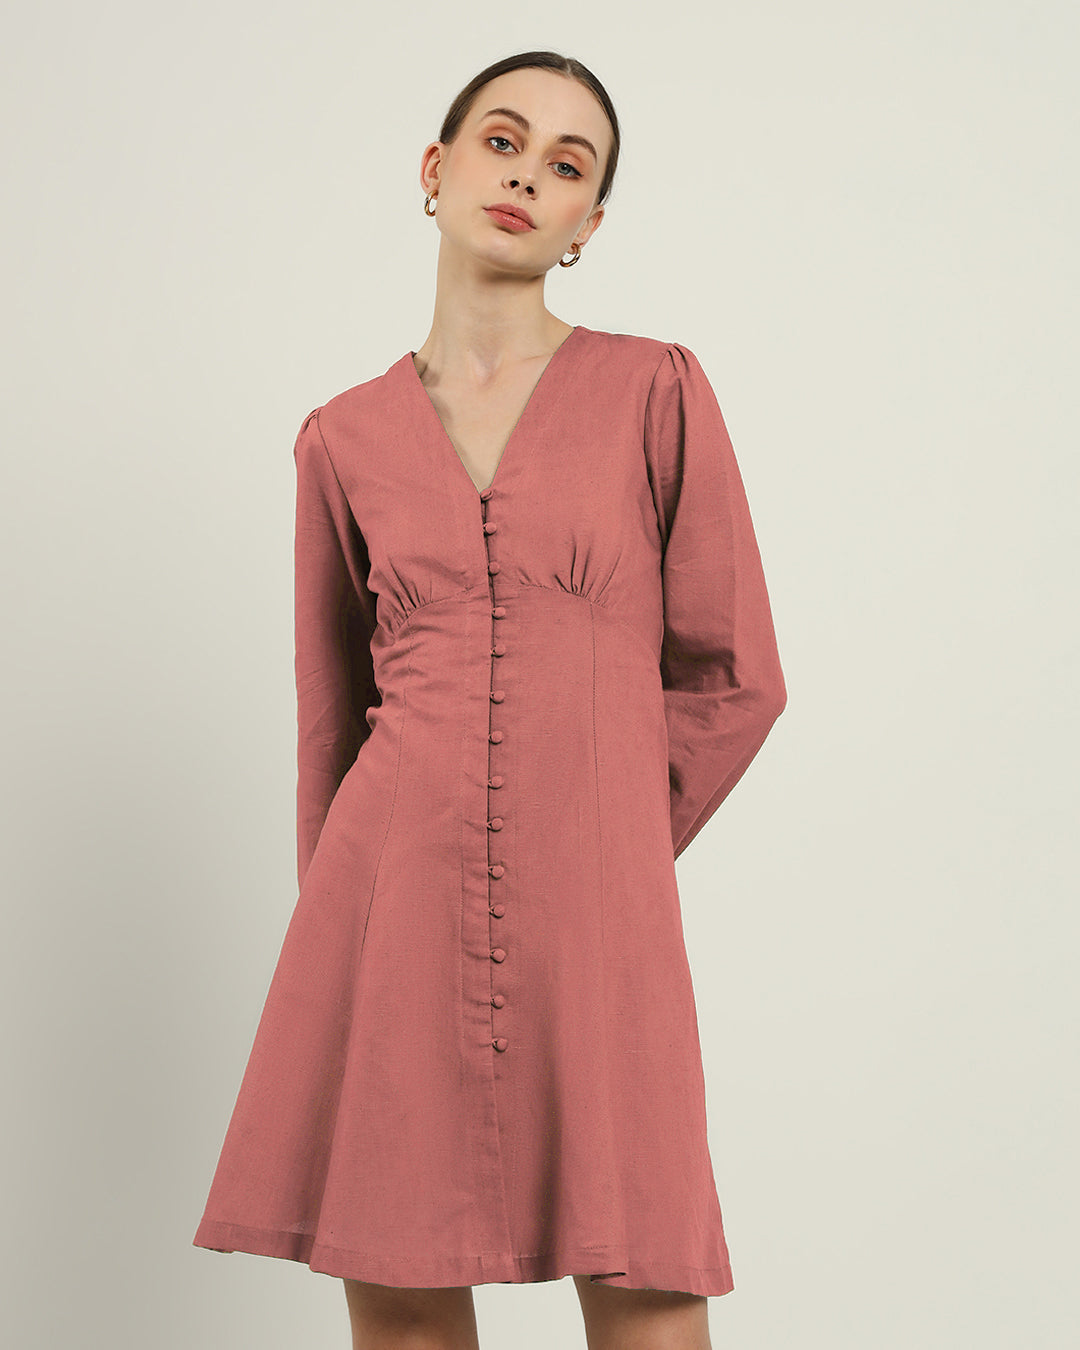 The Dafni Ivory Pink Cotton Dress